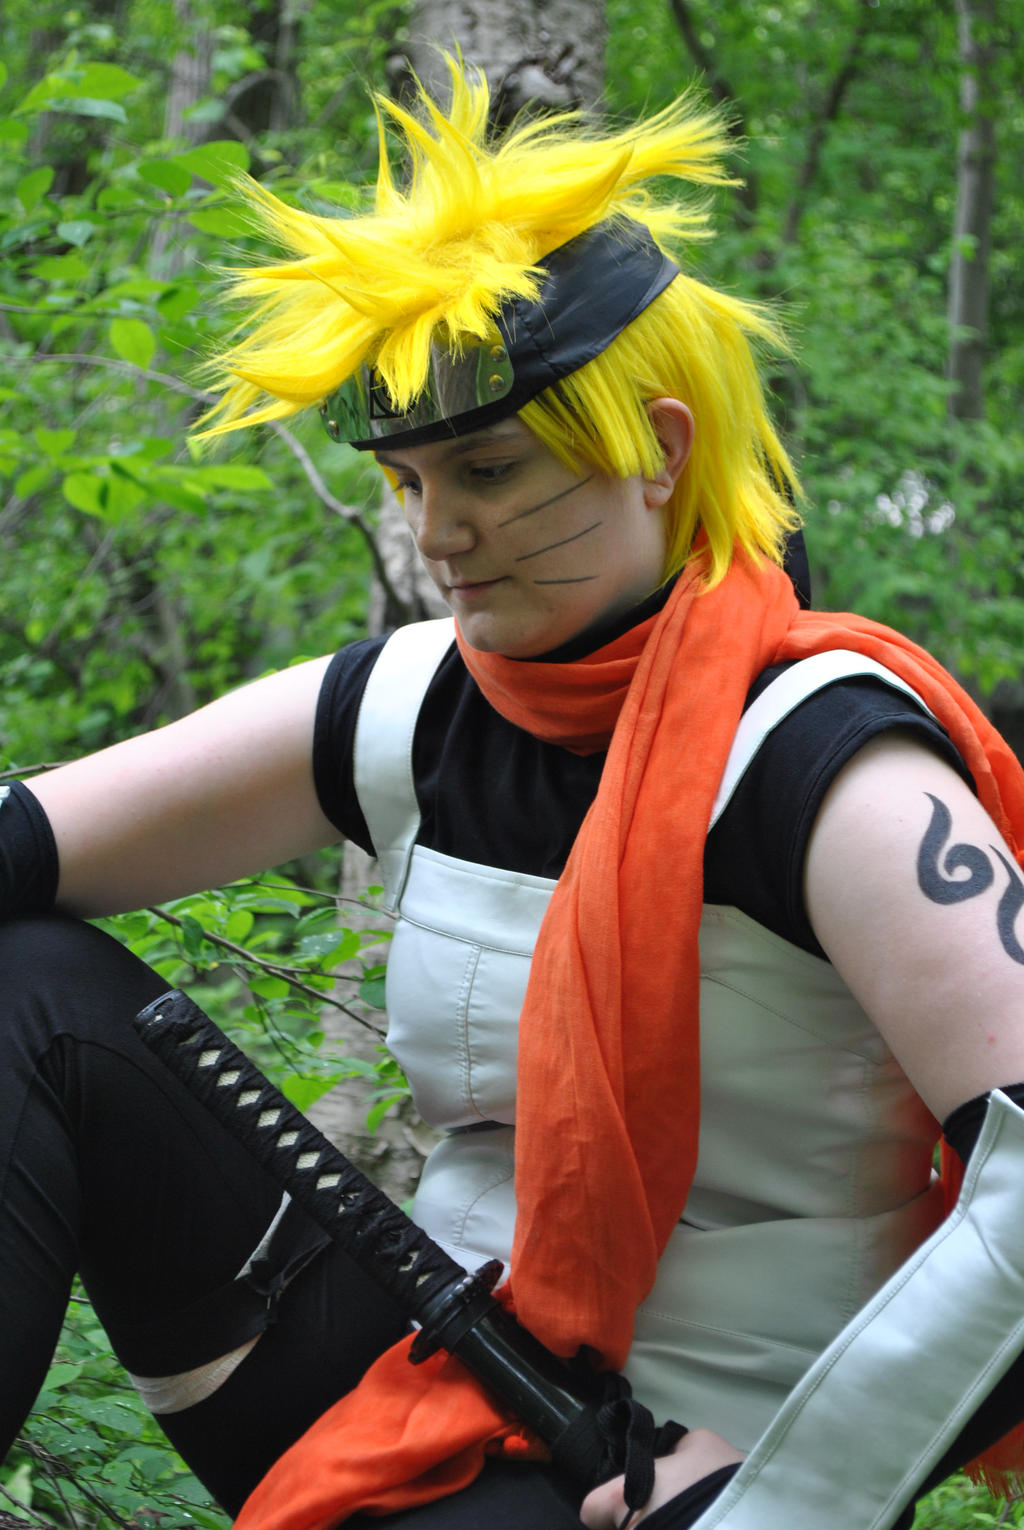 ANBU Naruto: At Rest